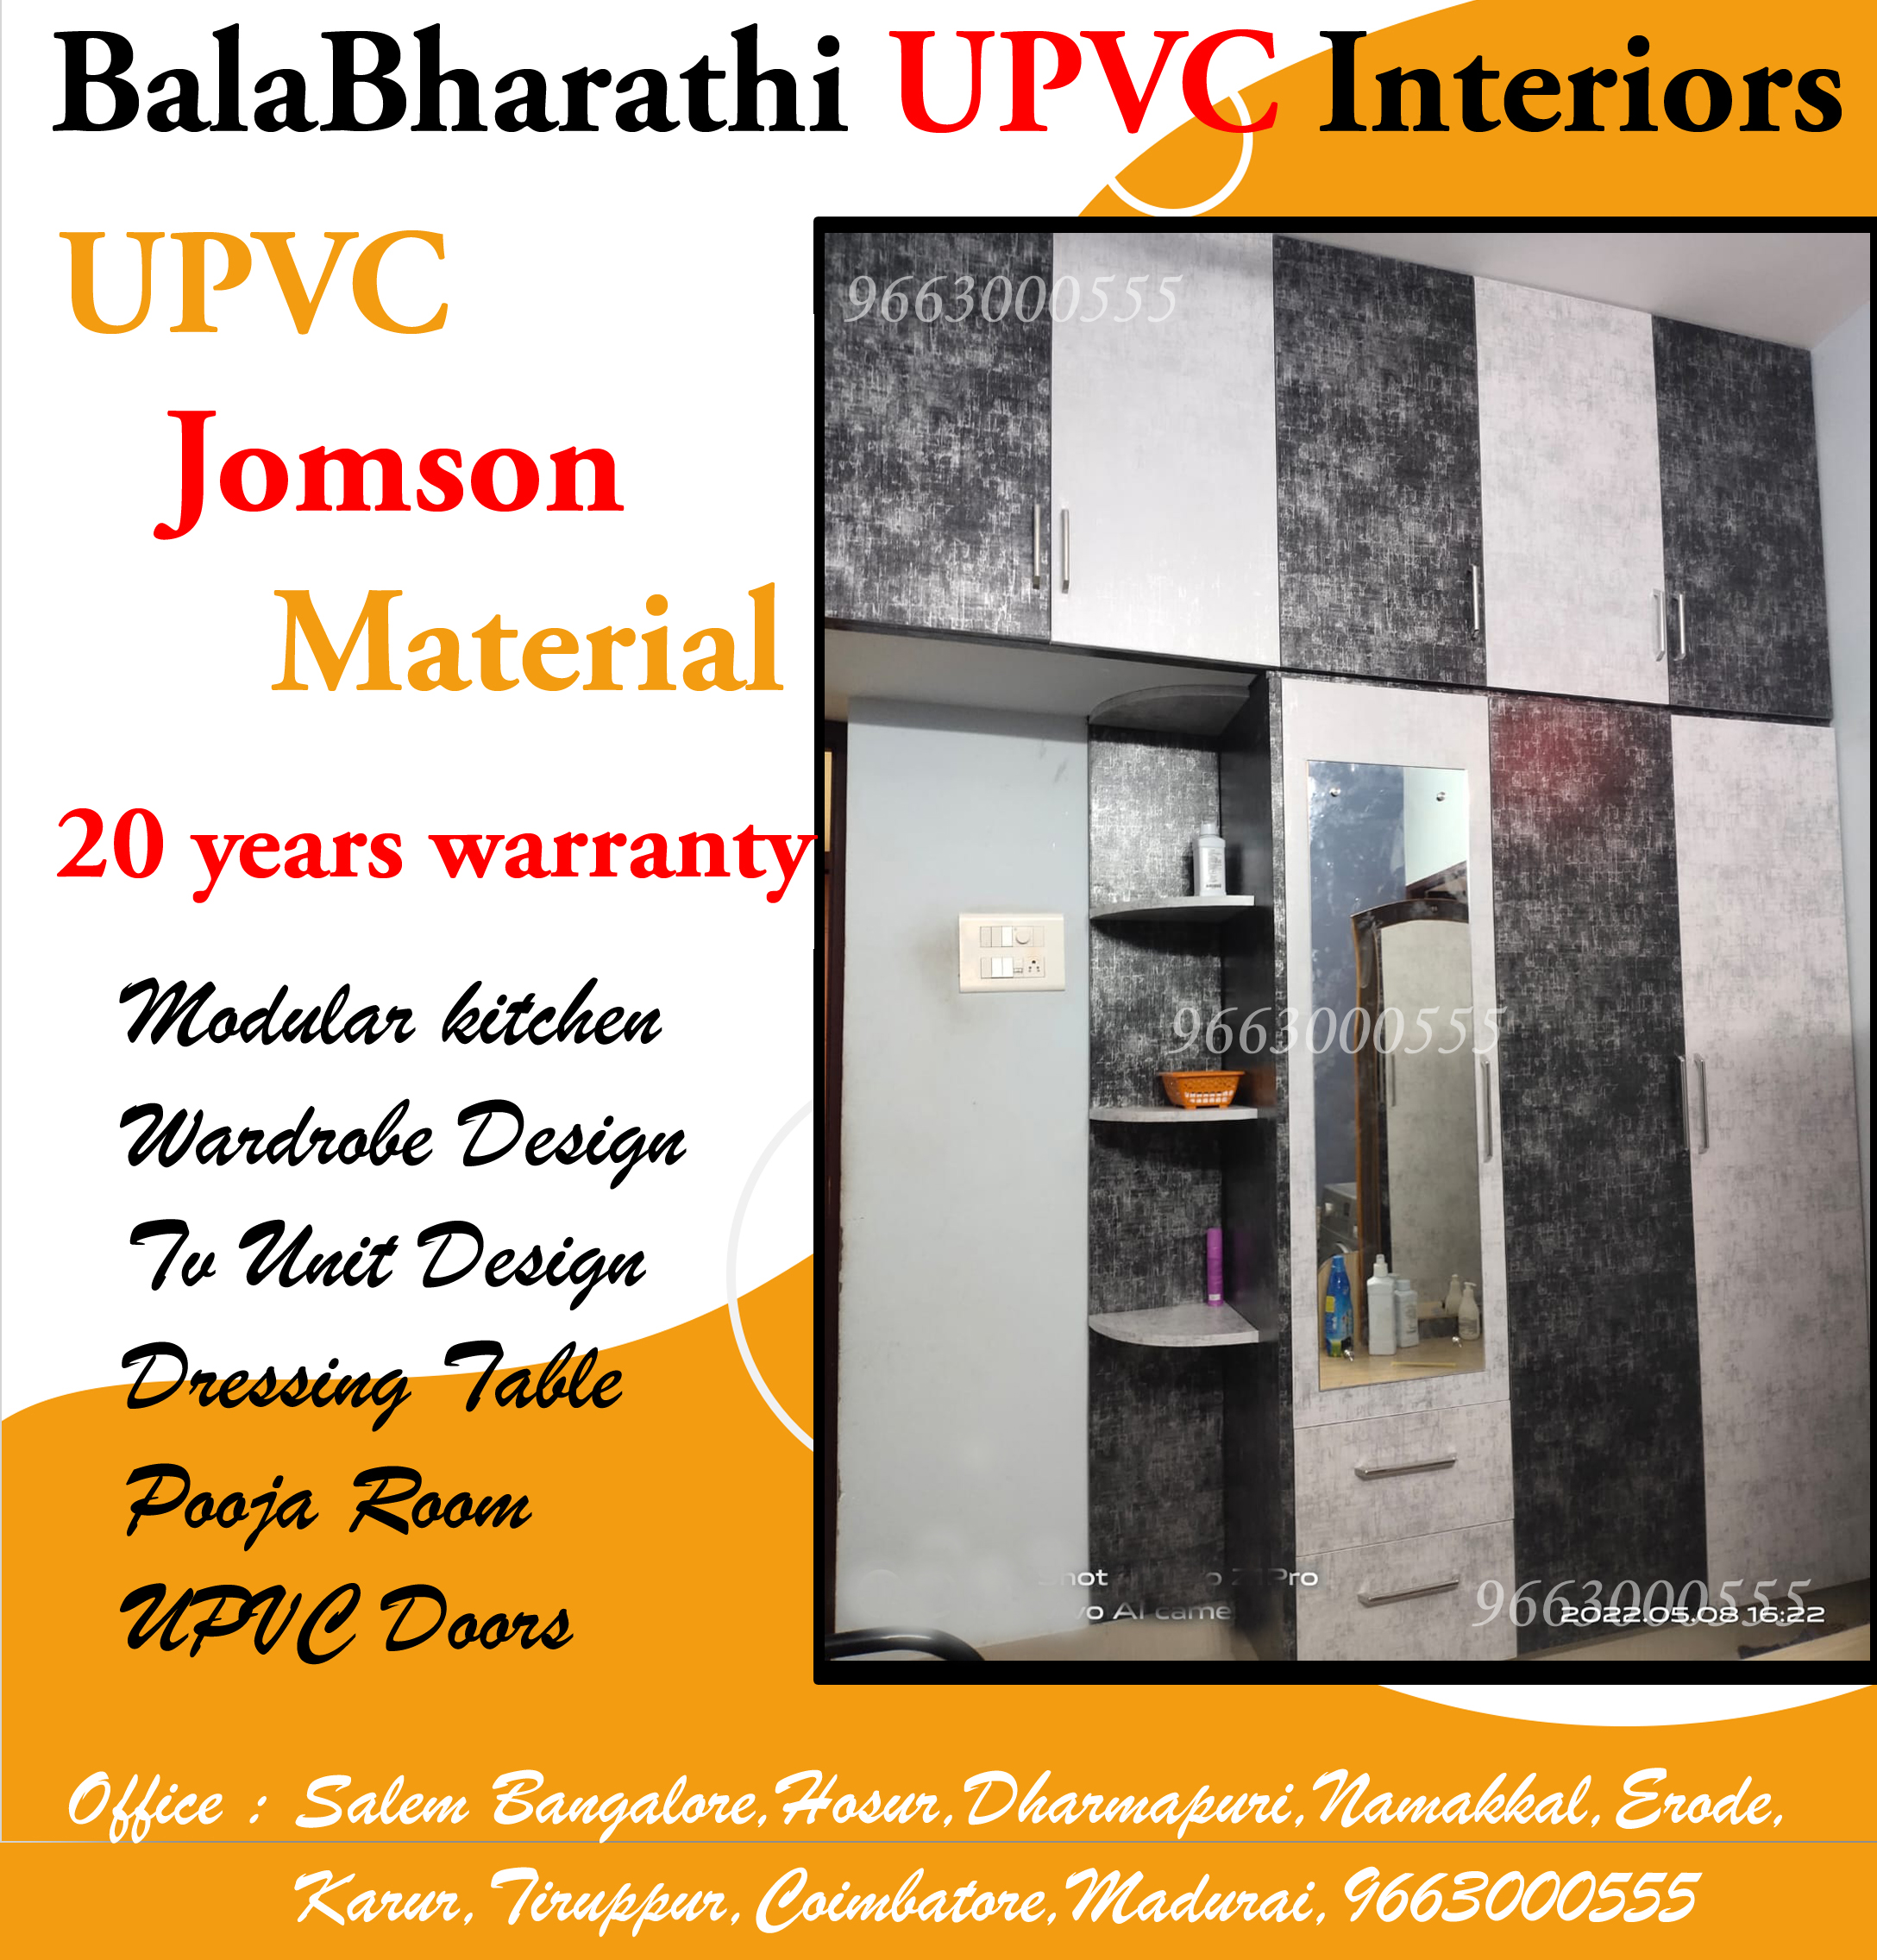 upvc interiors work